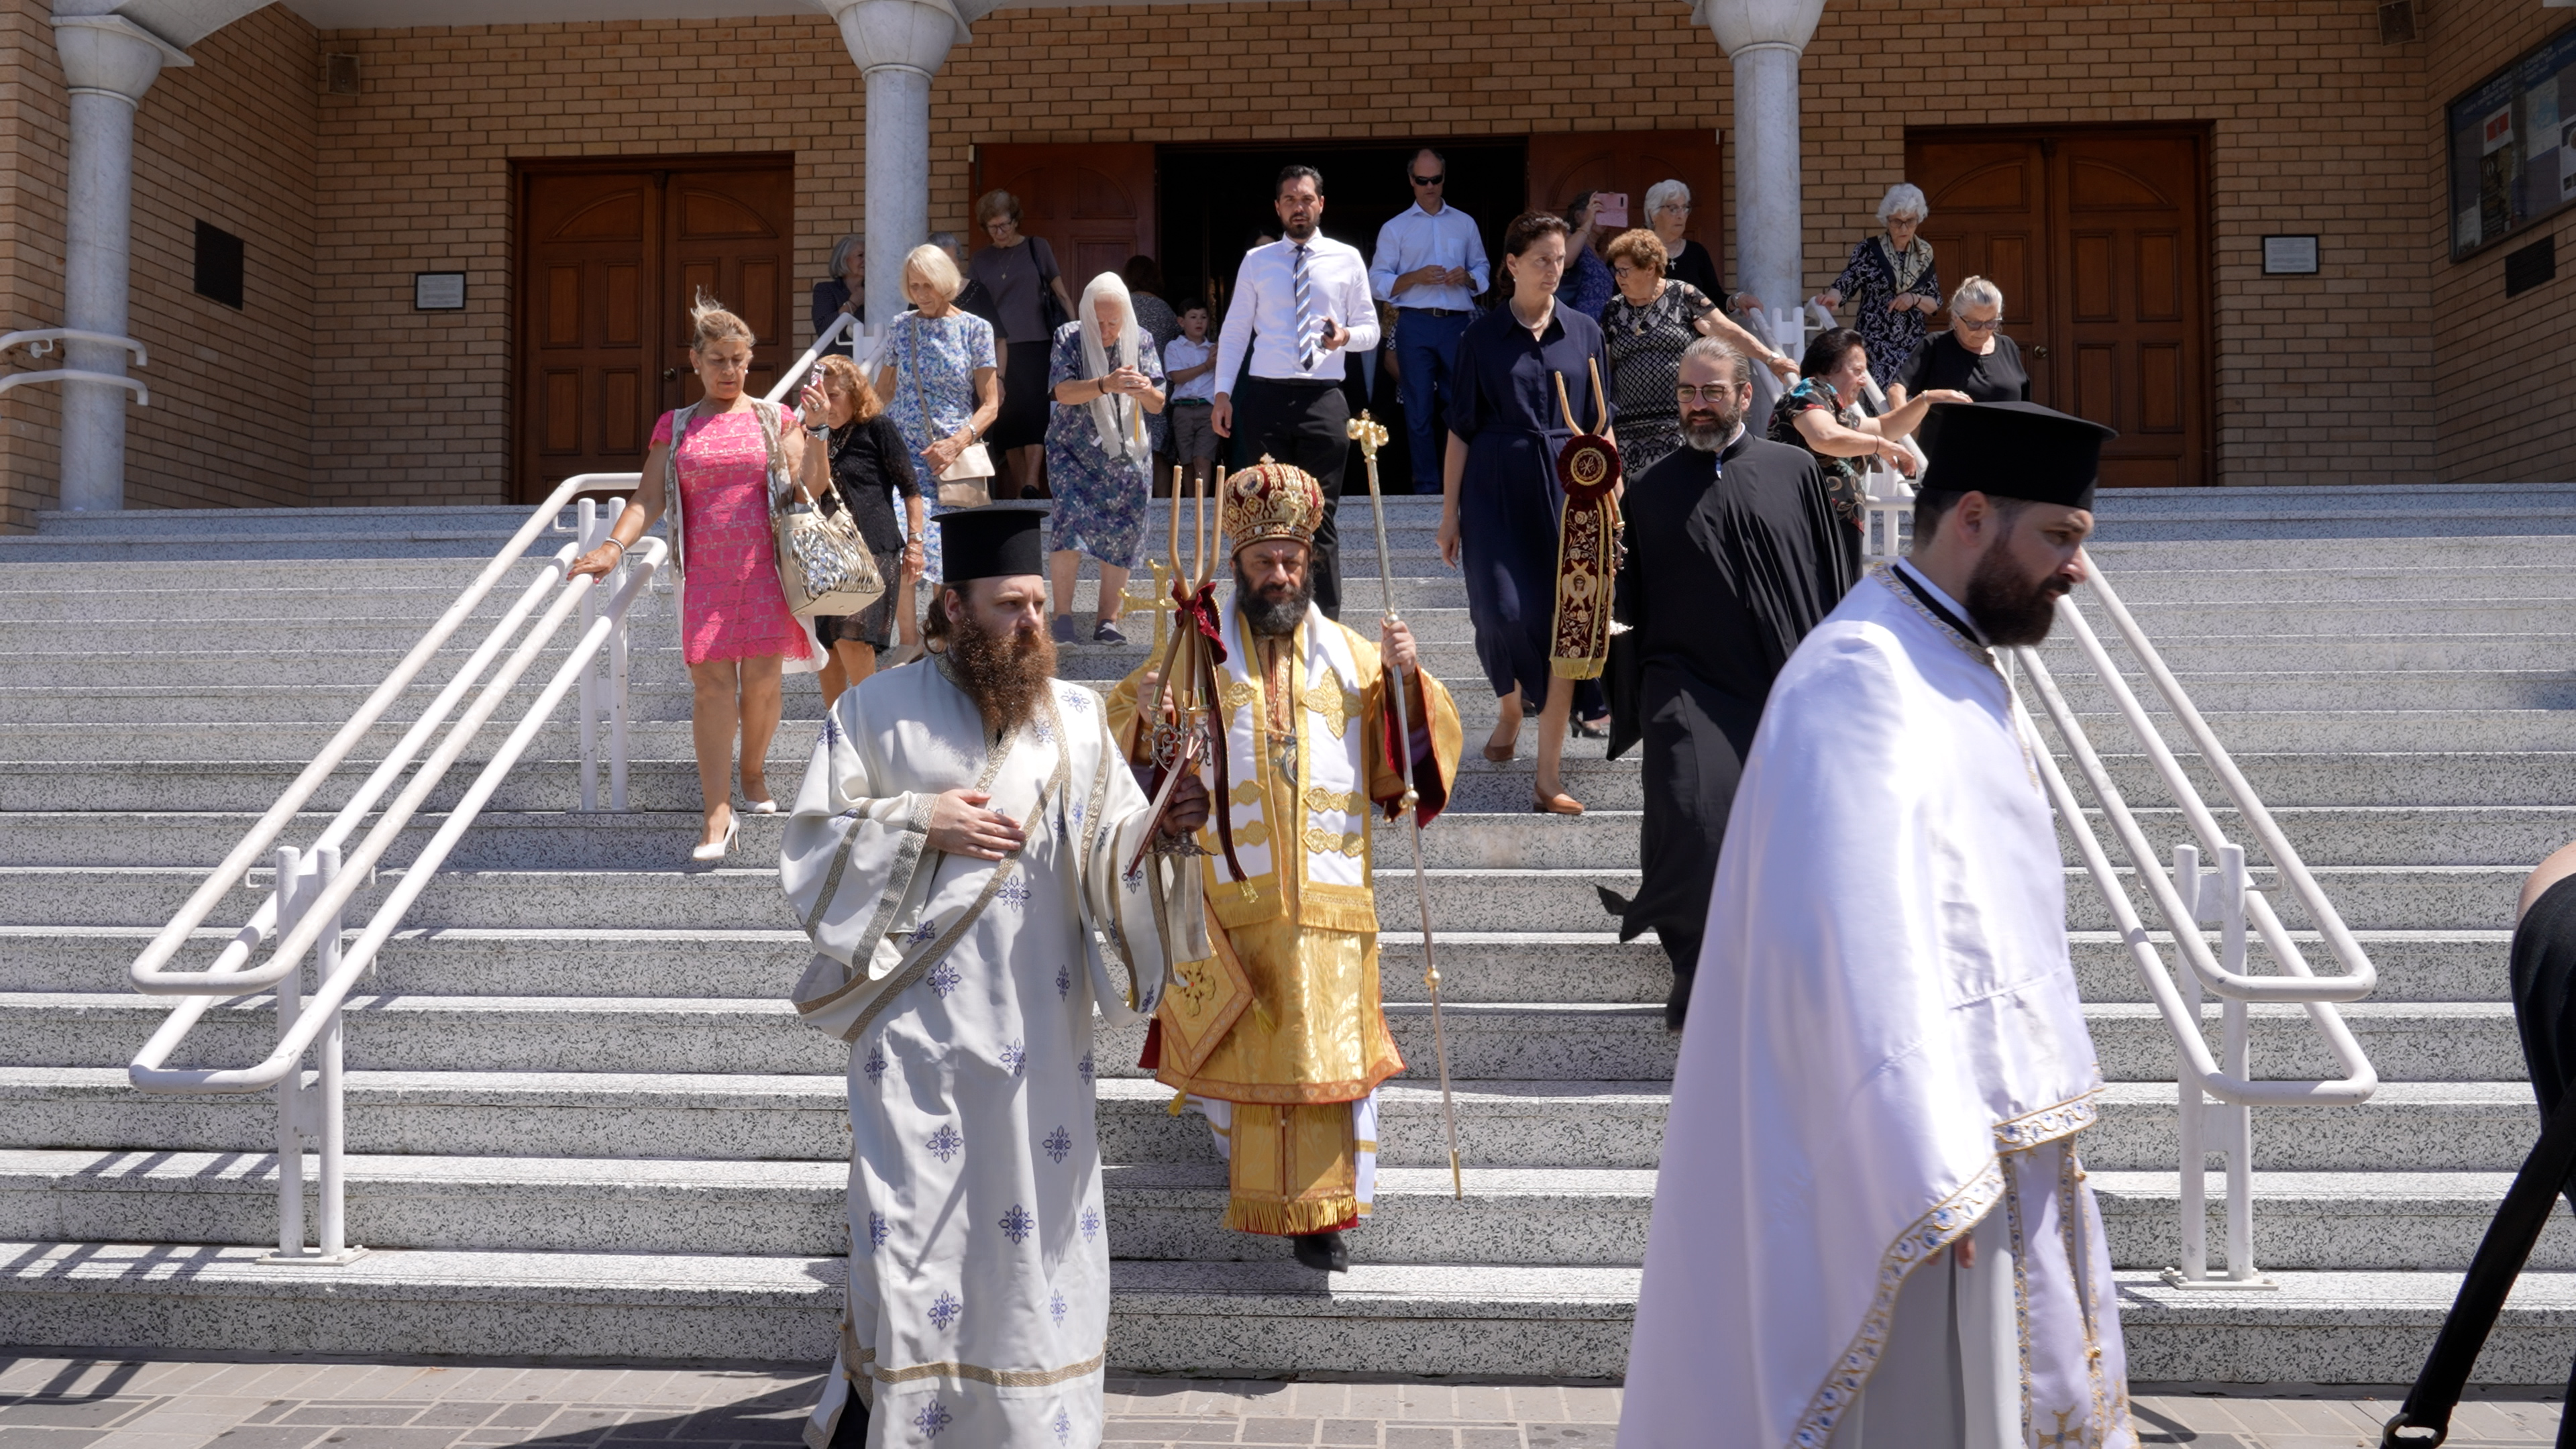 Sydney: The Feast Day of Saint Spyridon presided over by the Metropolitan of New Zealand